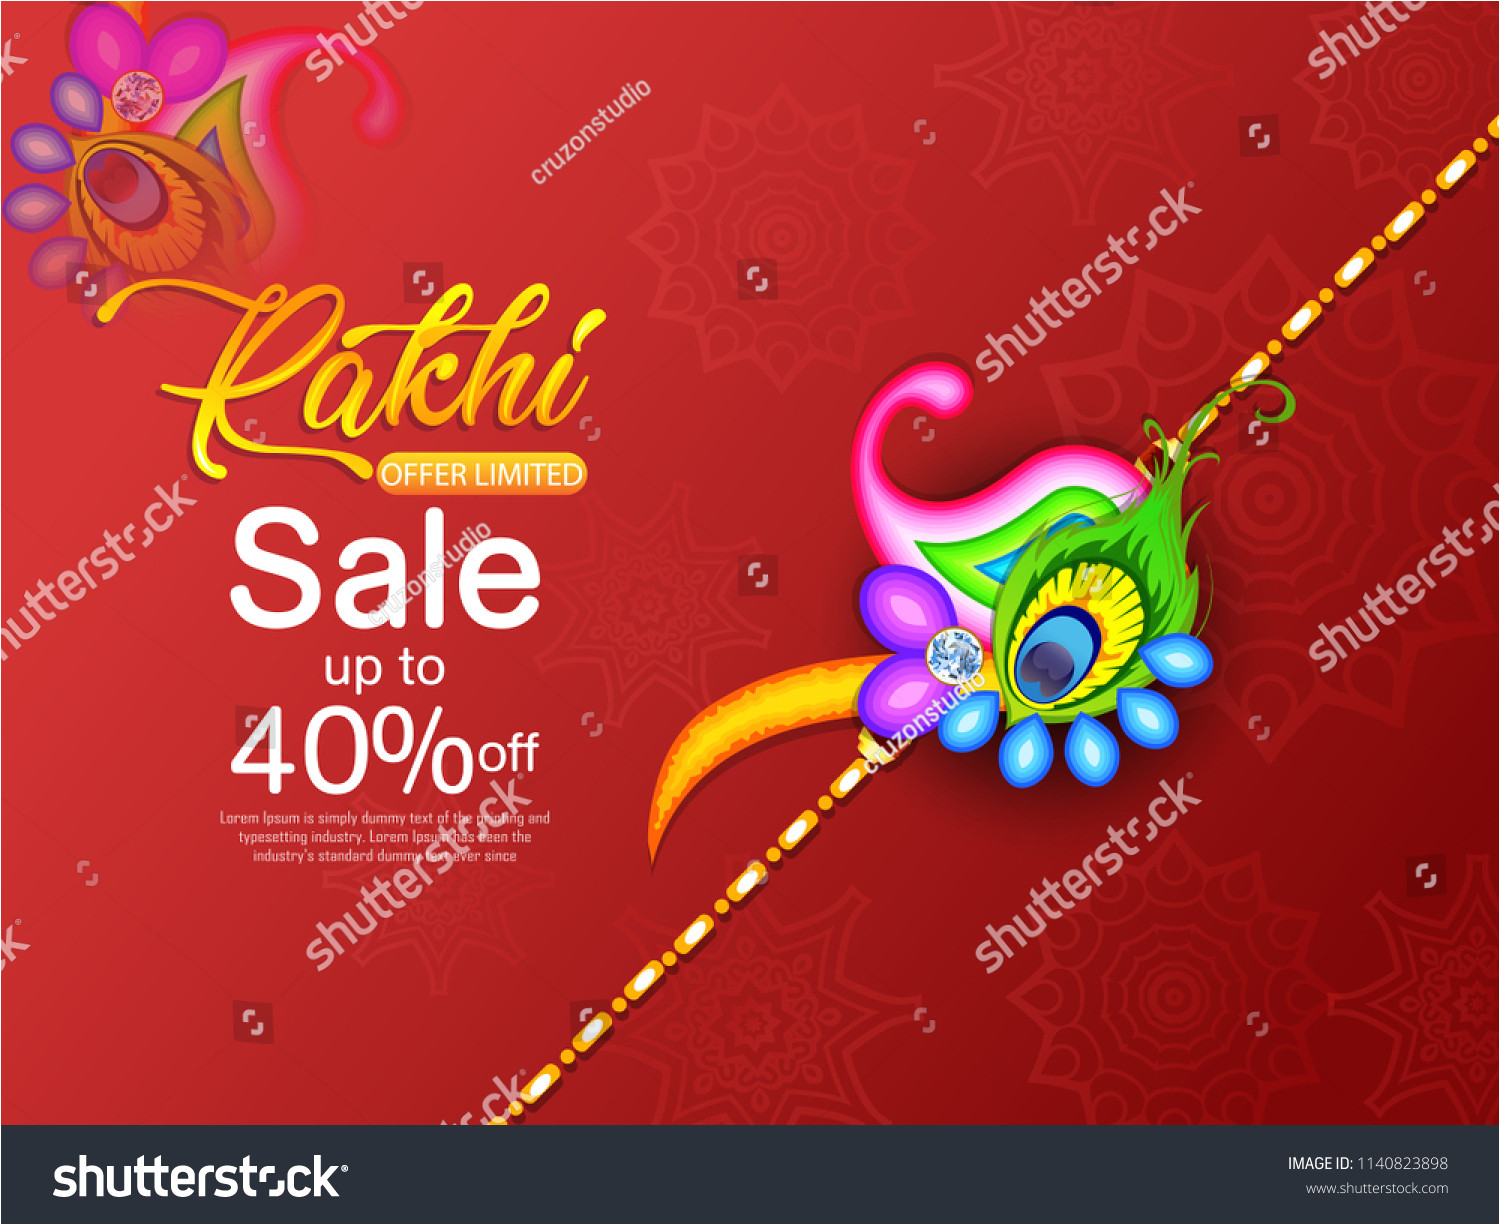 stock vector illustration of greeting card with decorative rakhi for raksha bandhan indian festival for brother 1140823898 jpg